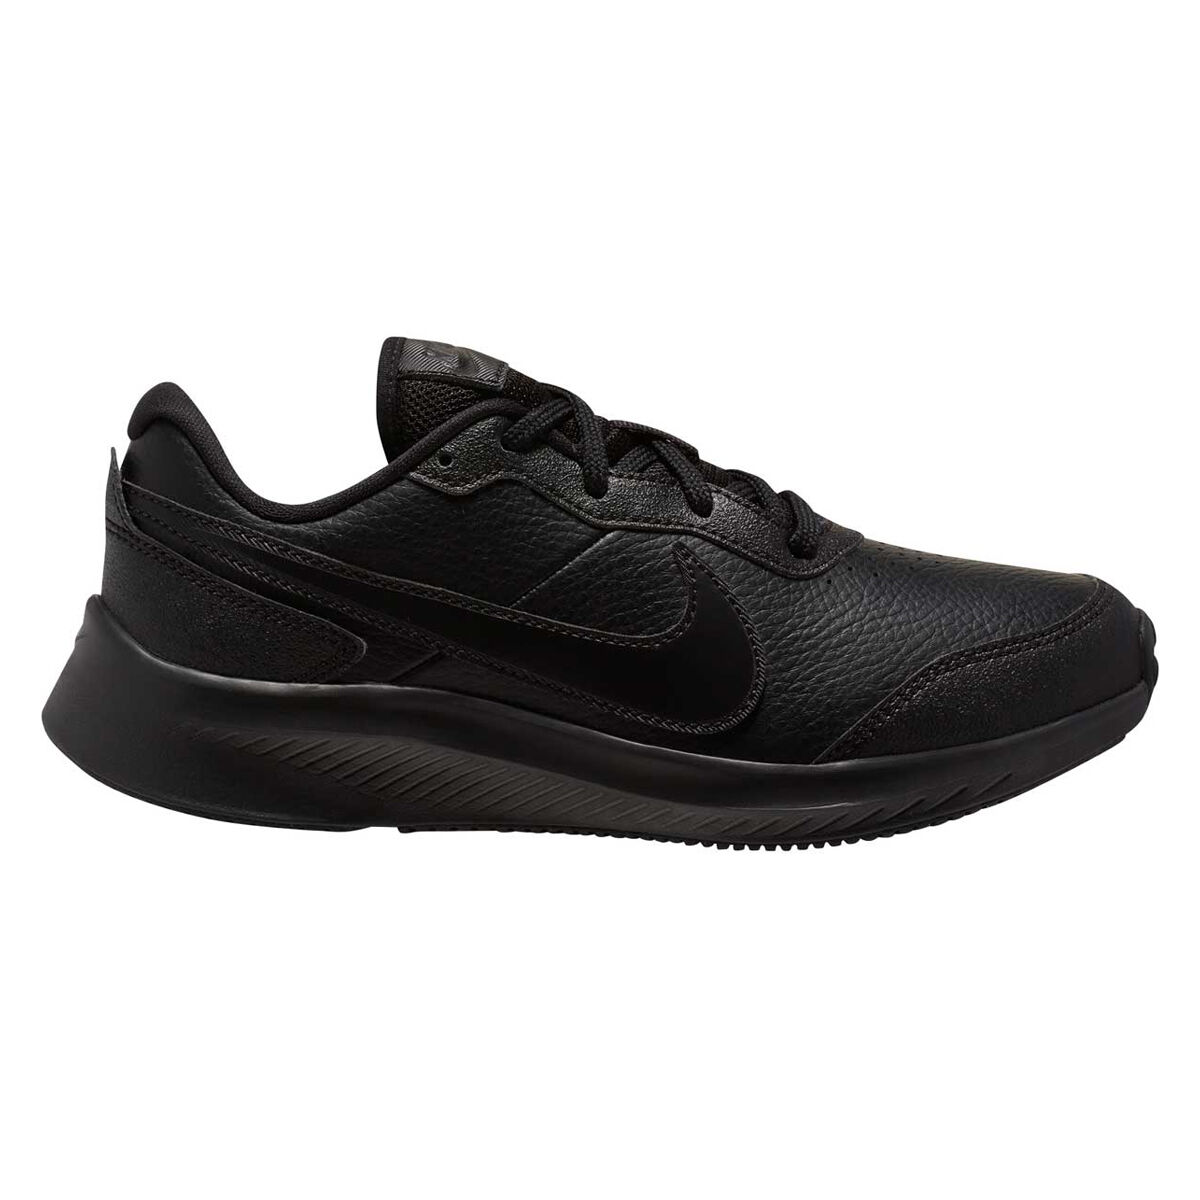 black leather nike school shoes